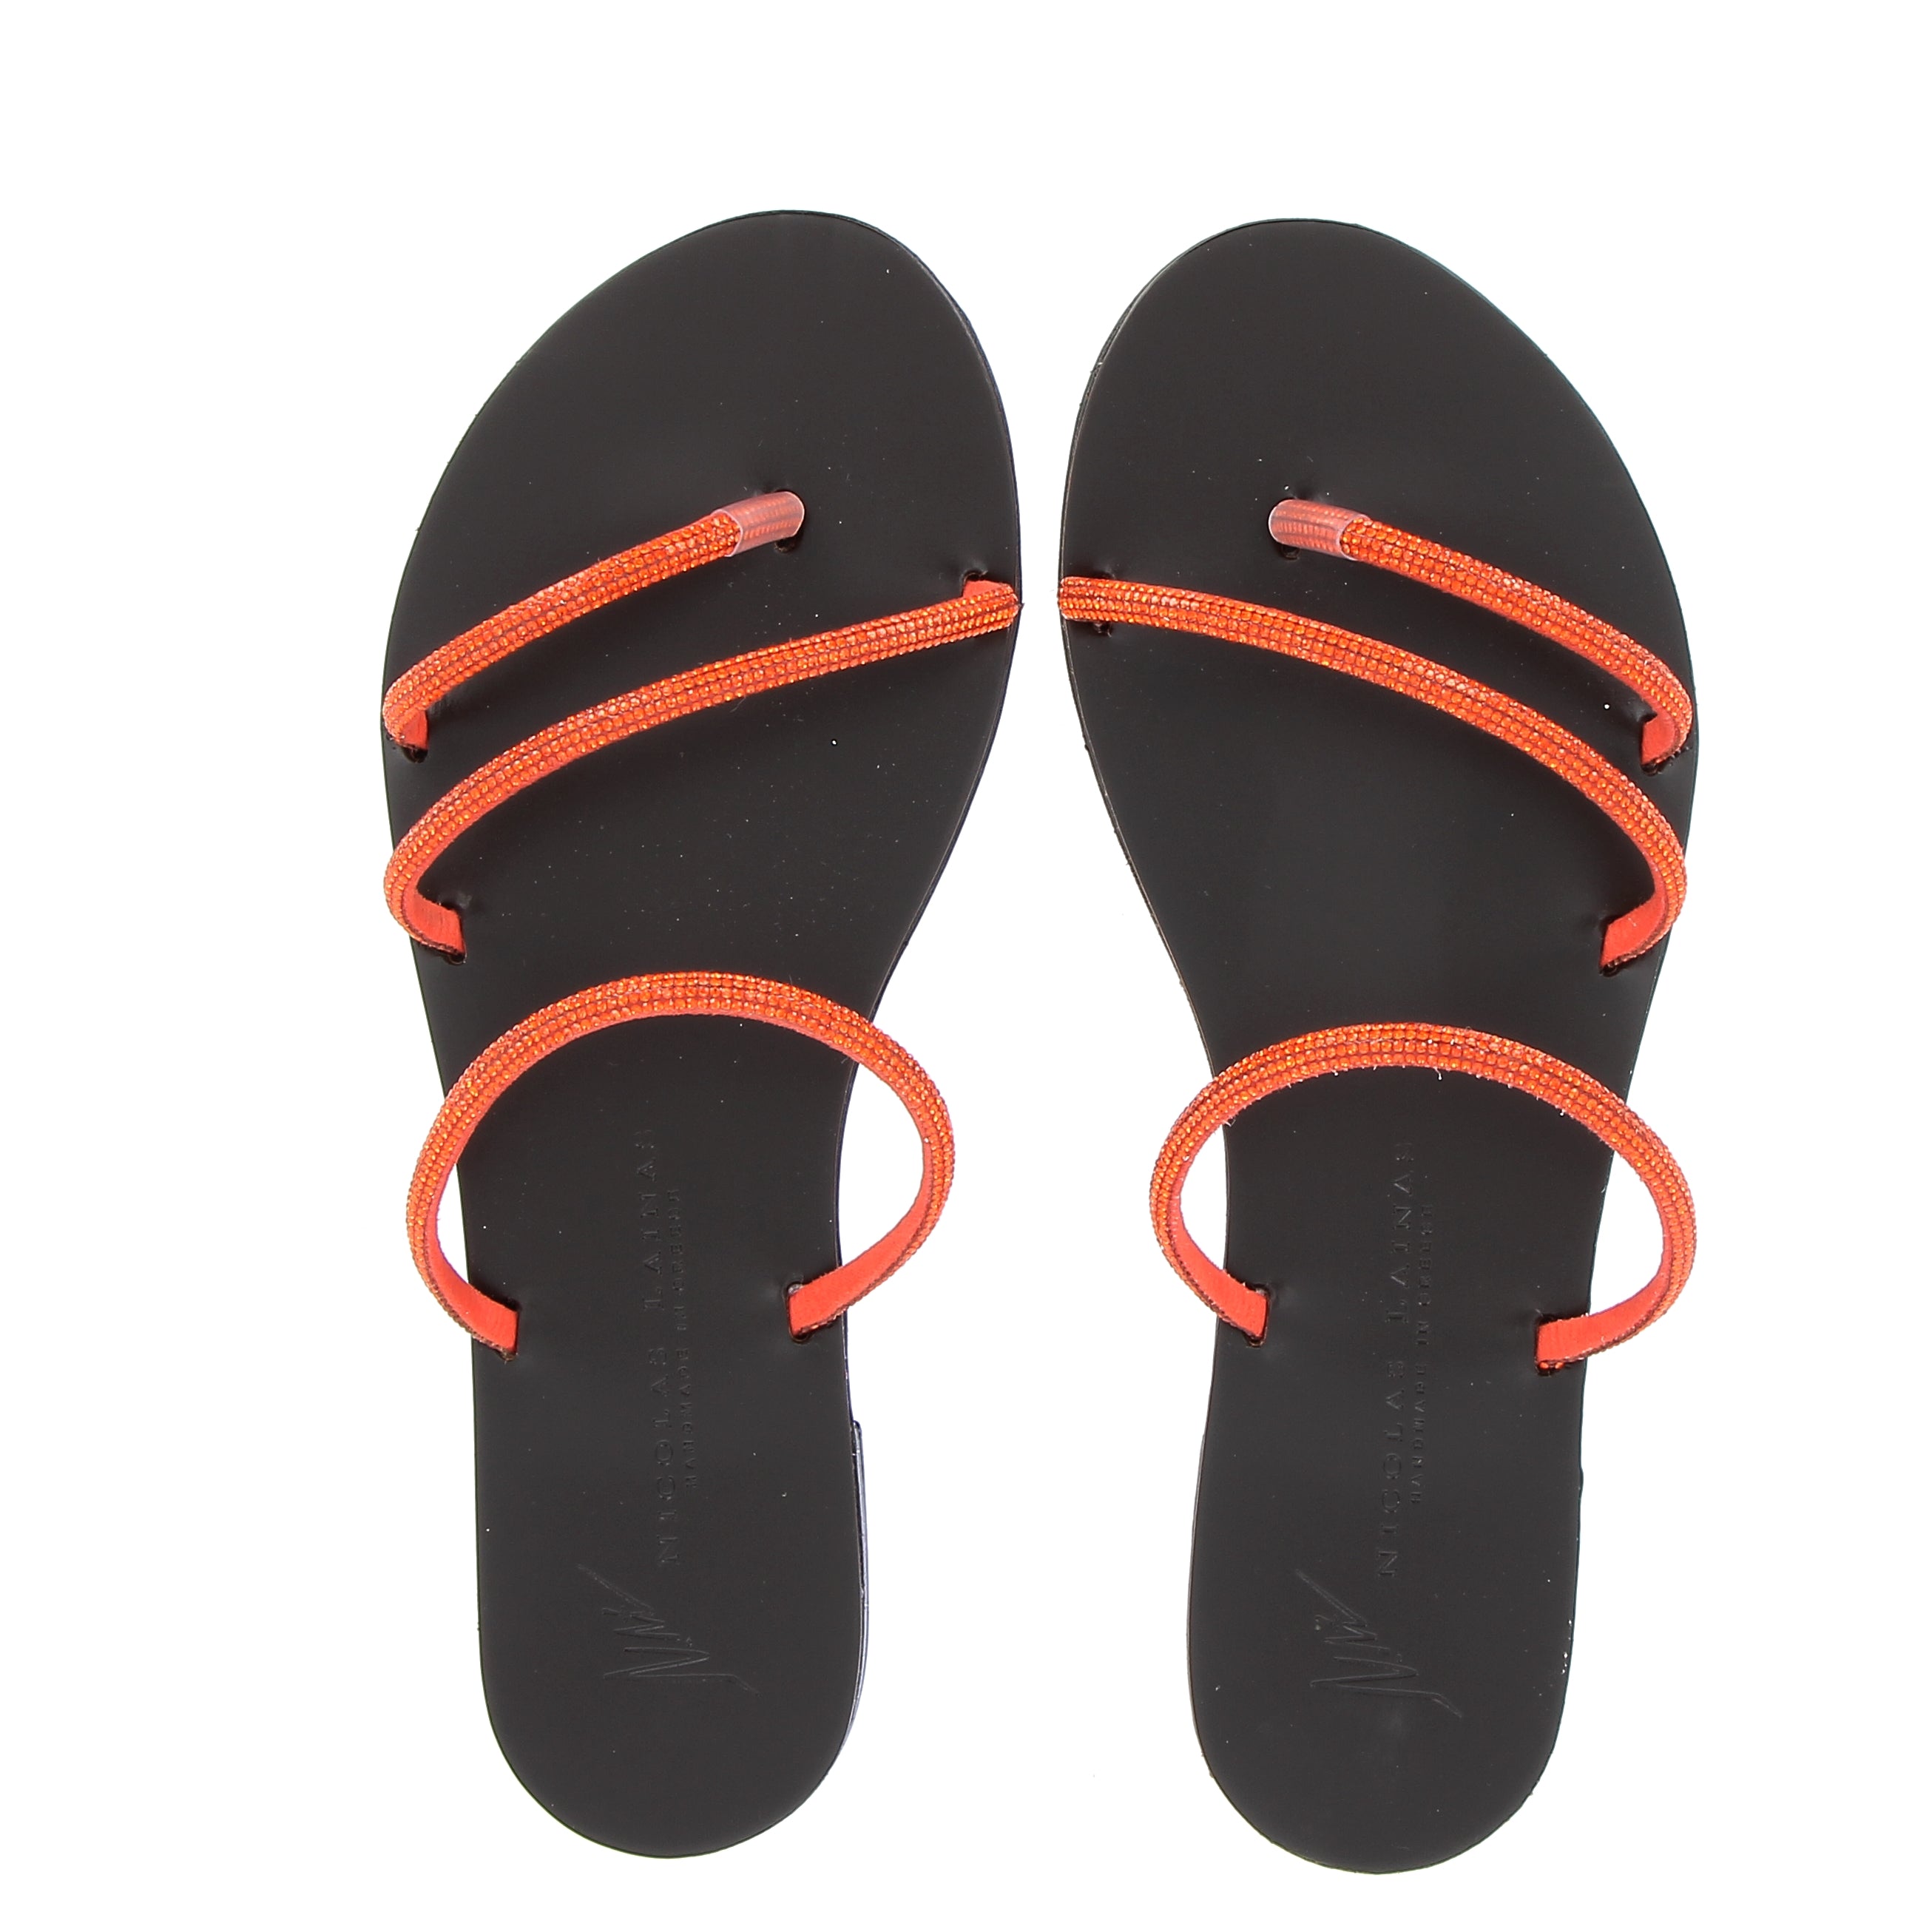 Flat sandal in orange rhinestones